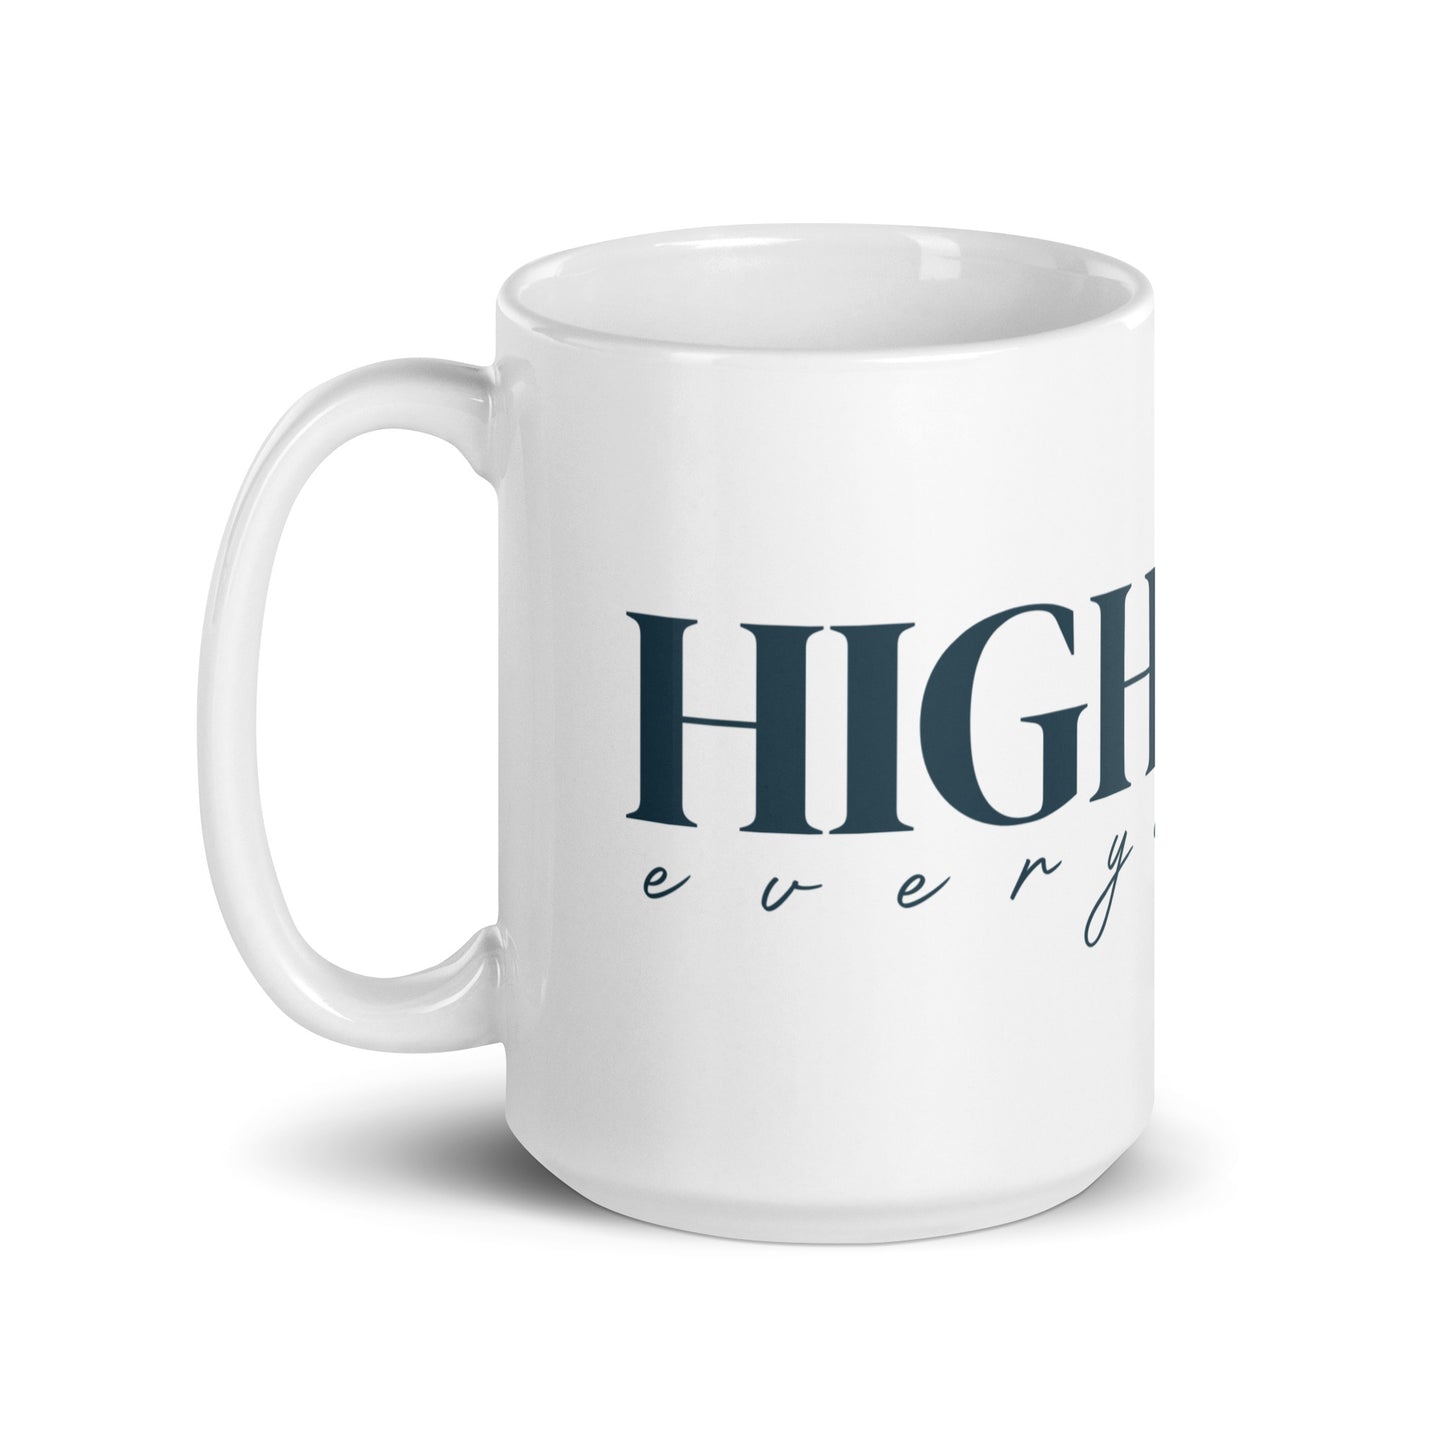 High Vibes White Glossy Mug